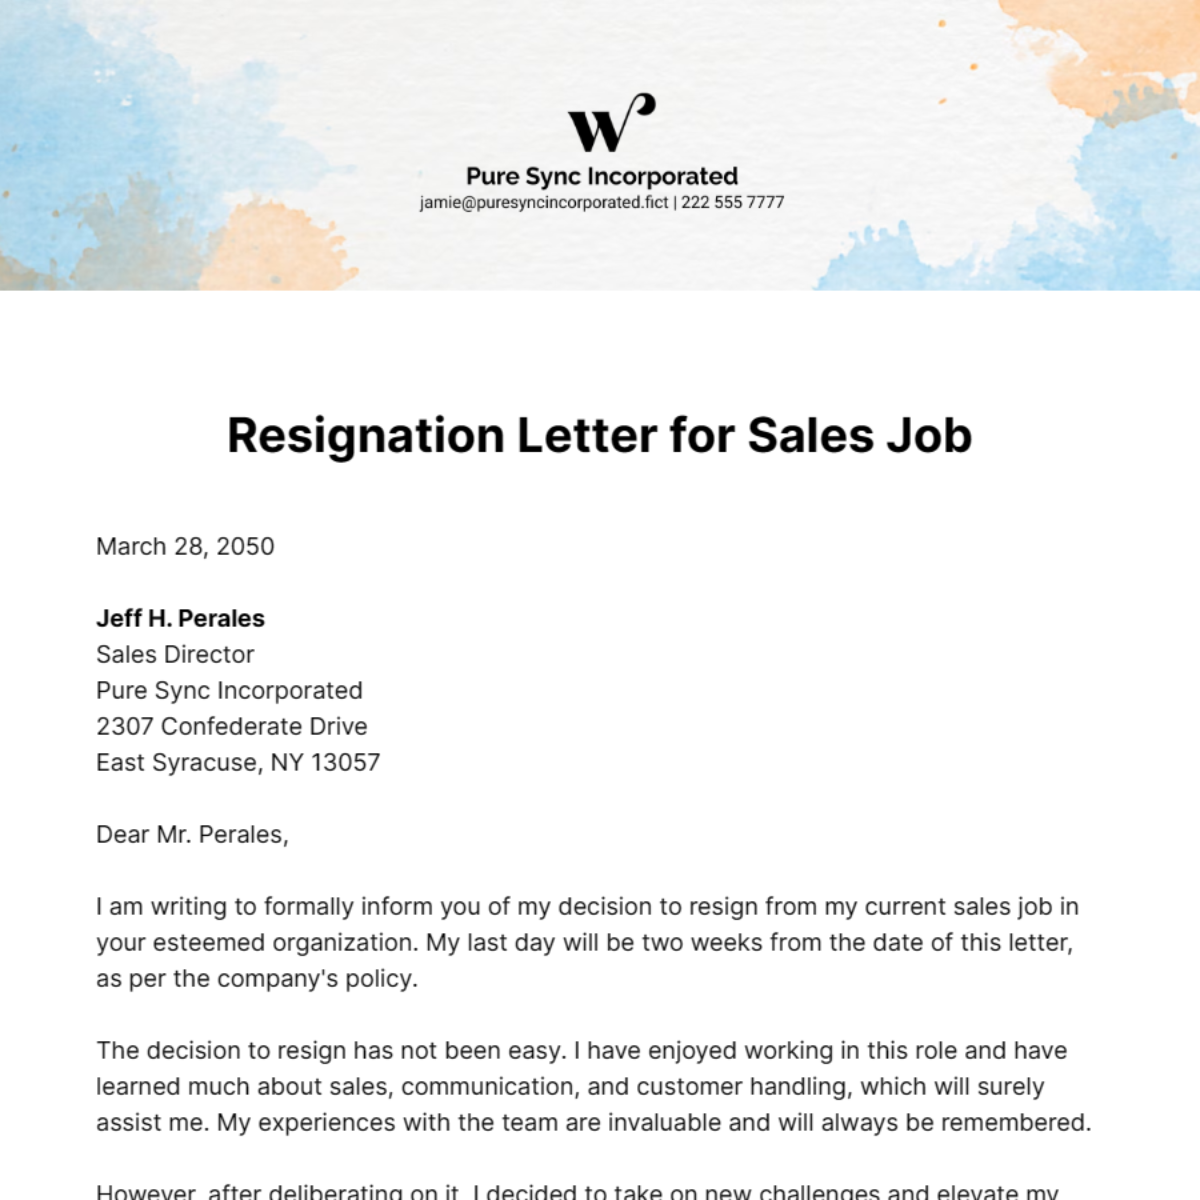 Resignation Letter for Sales Job Template